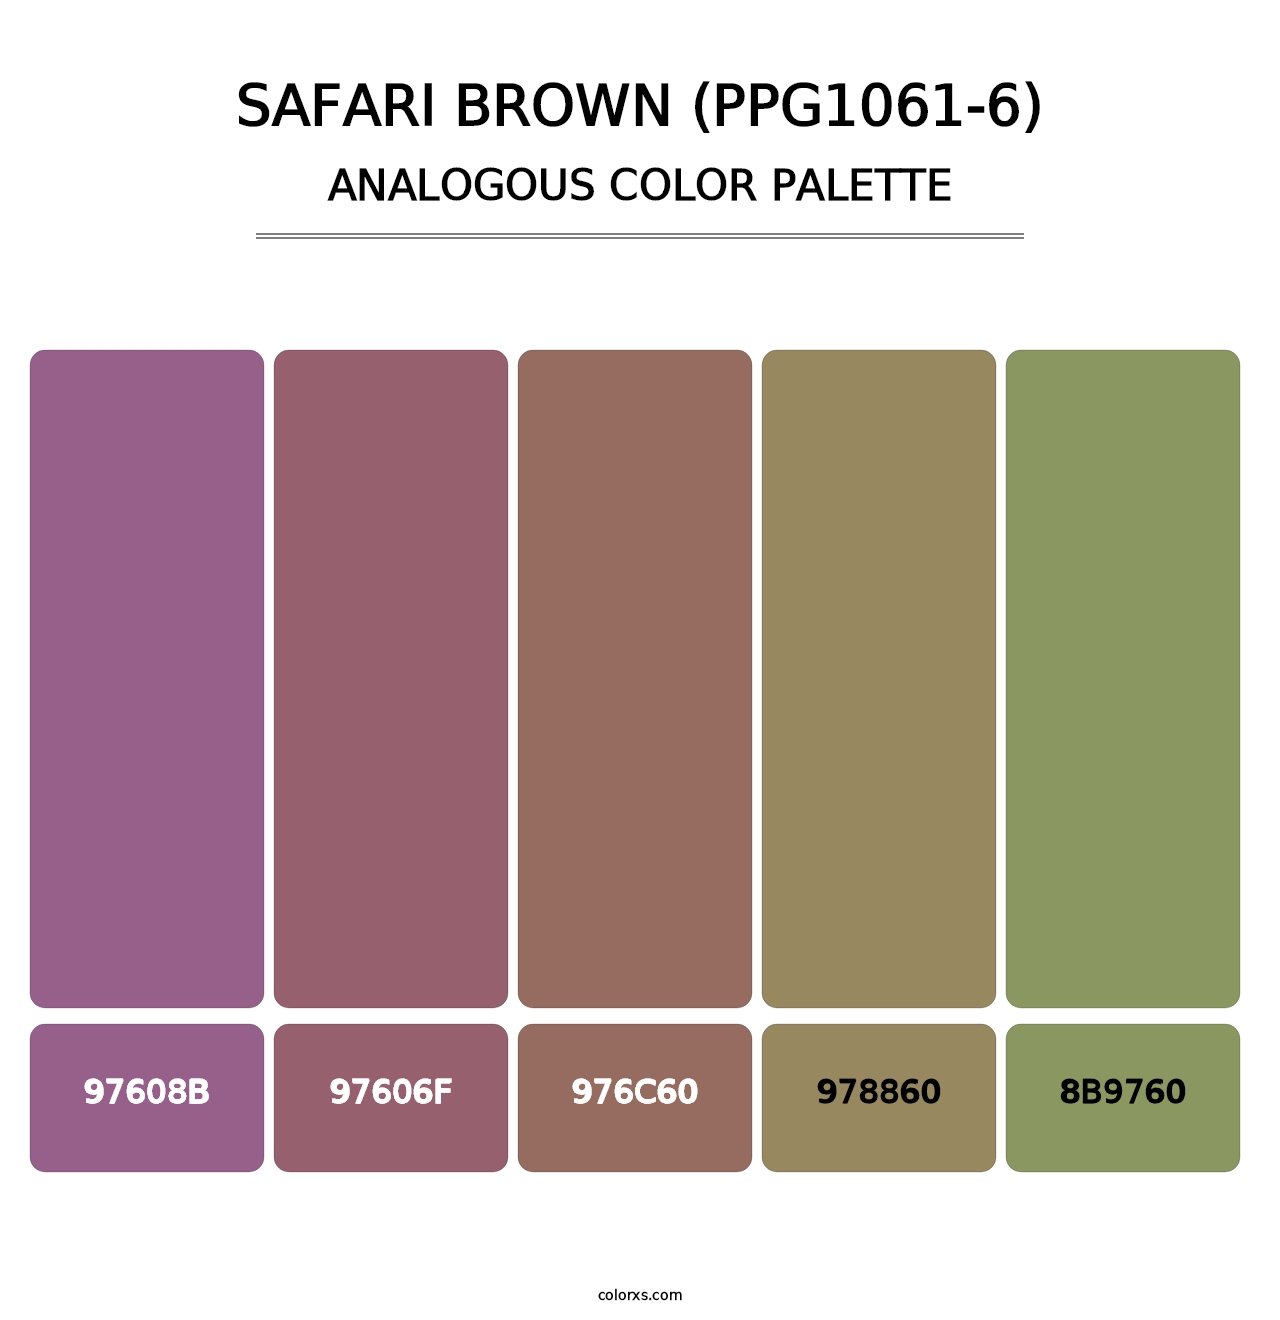 Safari Brown (PPG1061-6) - Analogous Color Palette